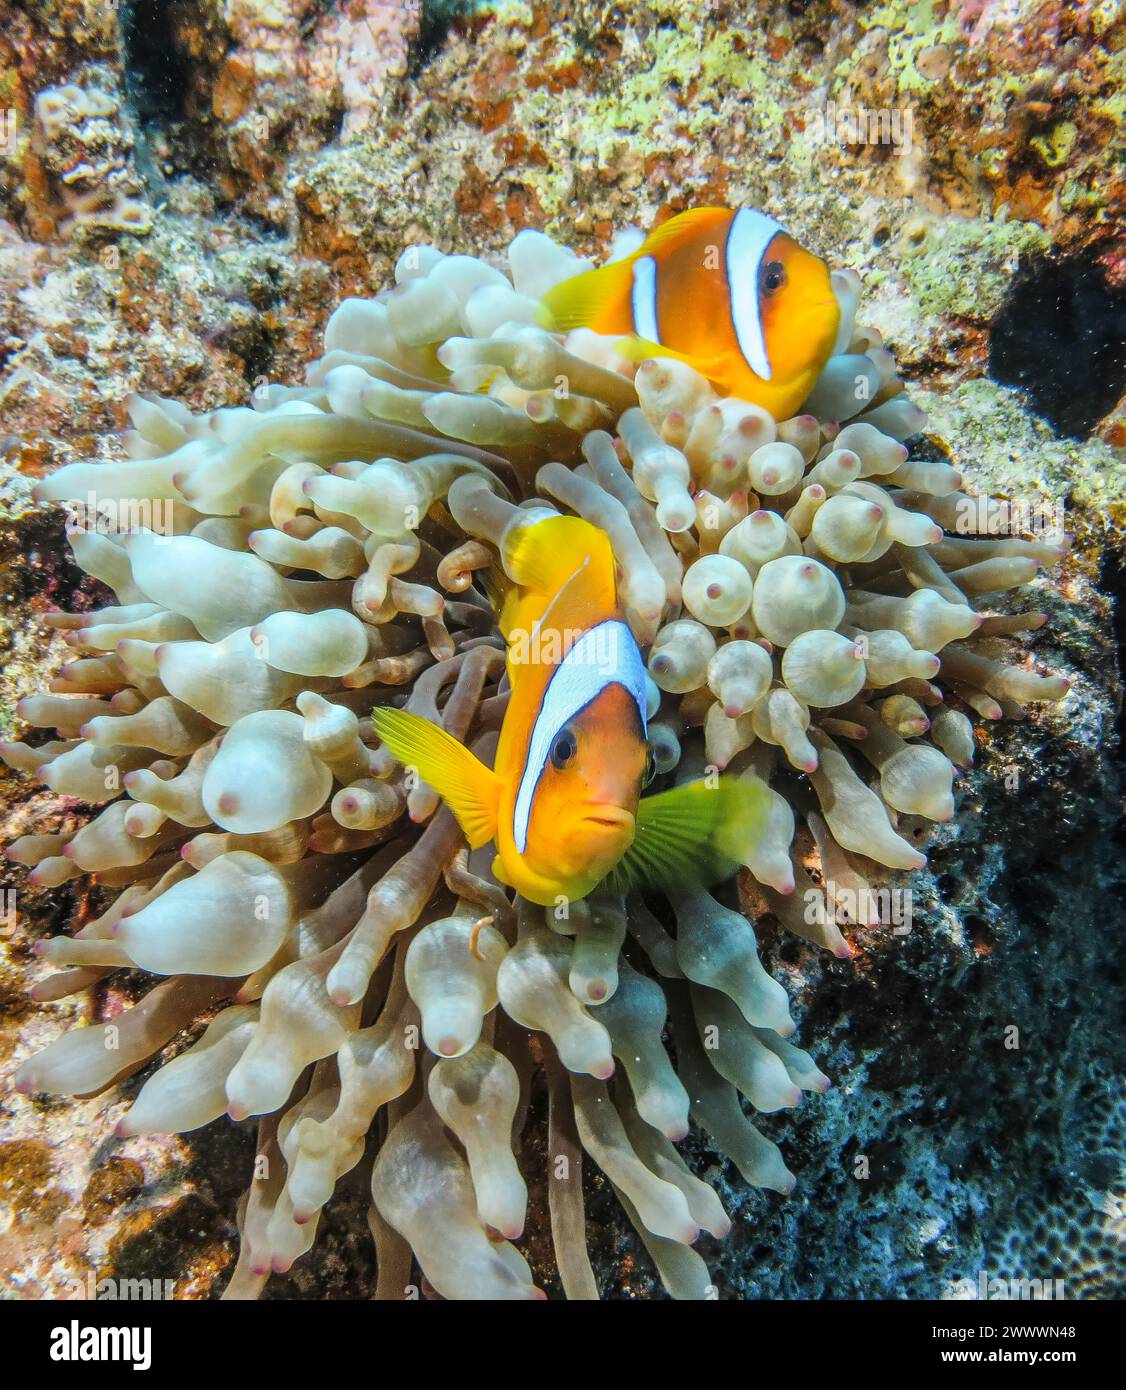 Blasenanemone (Entacmaea quadricolor), Rotmeer-Anemonenfisch (Amphiprion bicinctus), Tauchplatz Siyul Kebir Reef, Rotes Meer, Ägypten Foto Stock